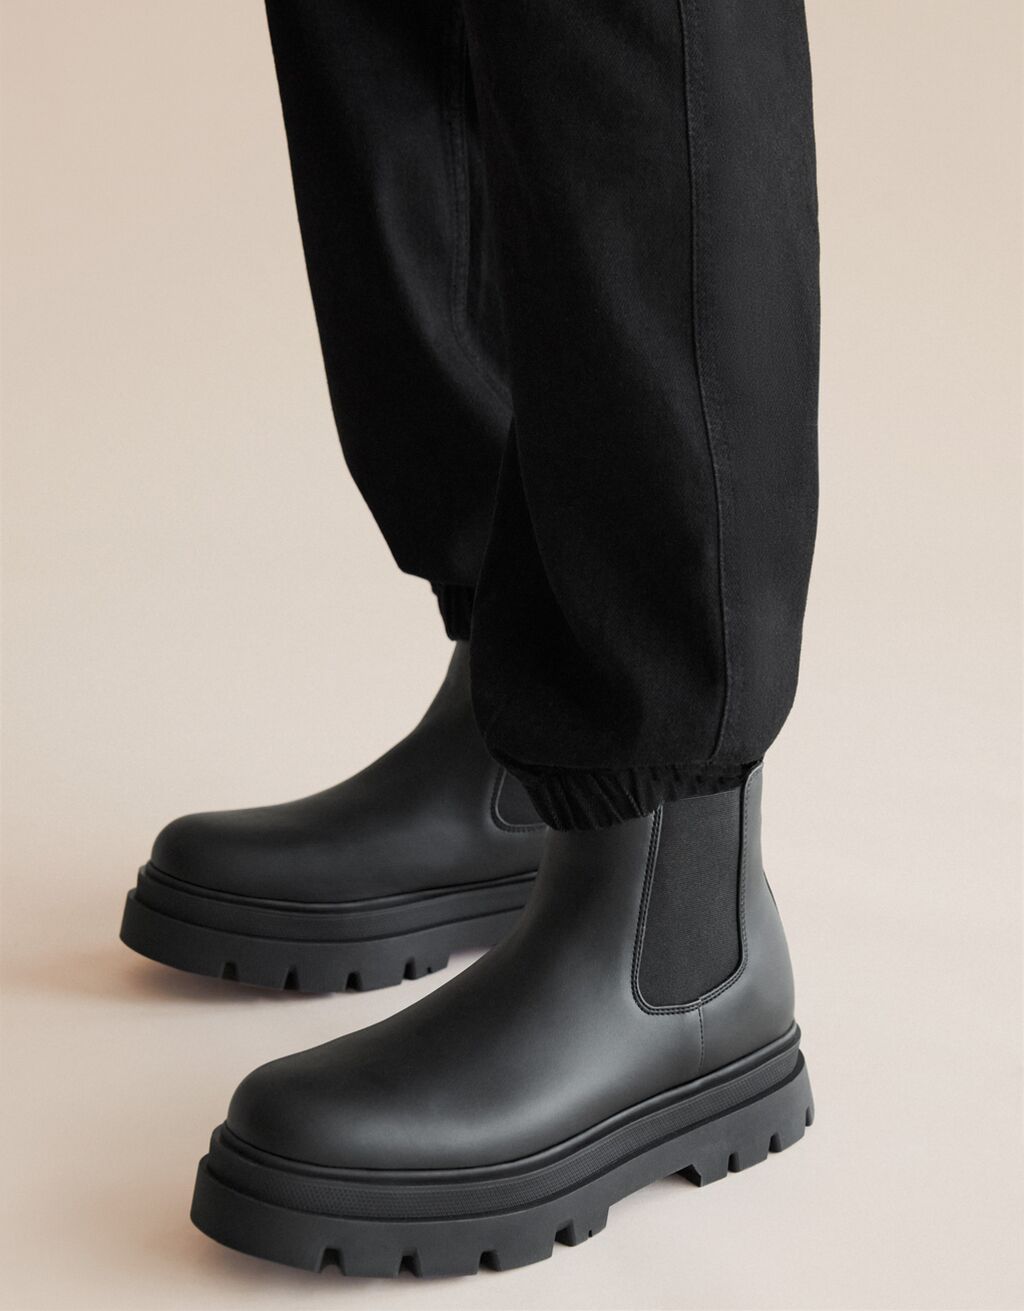 Men’s elastic ankle boots